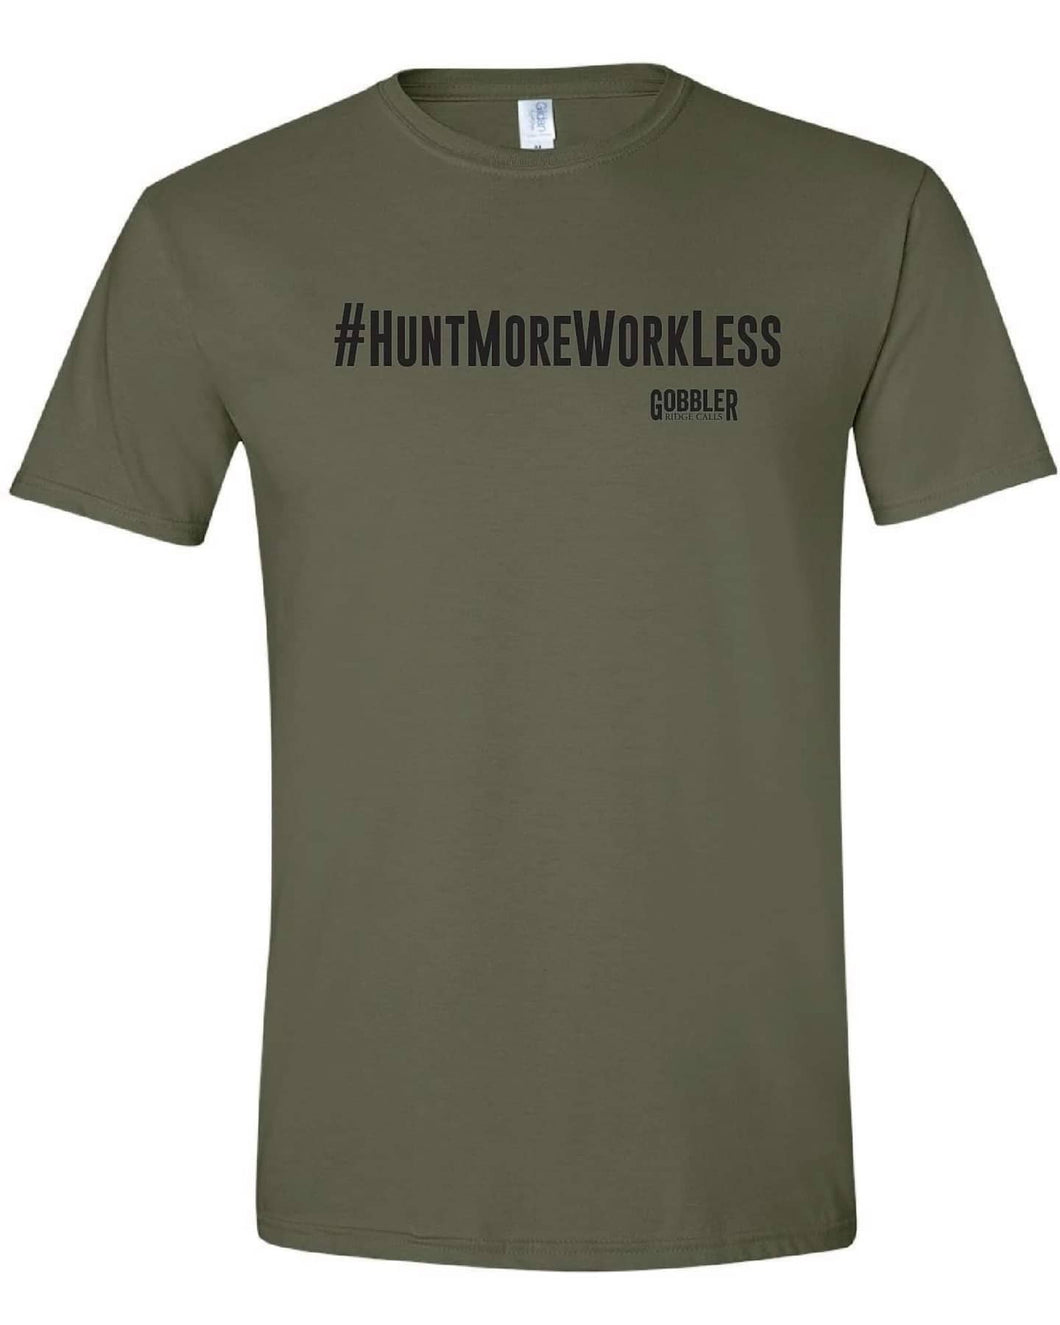 #HuntMoreWorkLess t-shirt